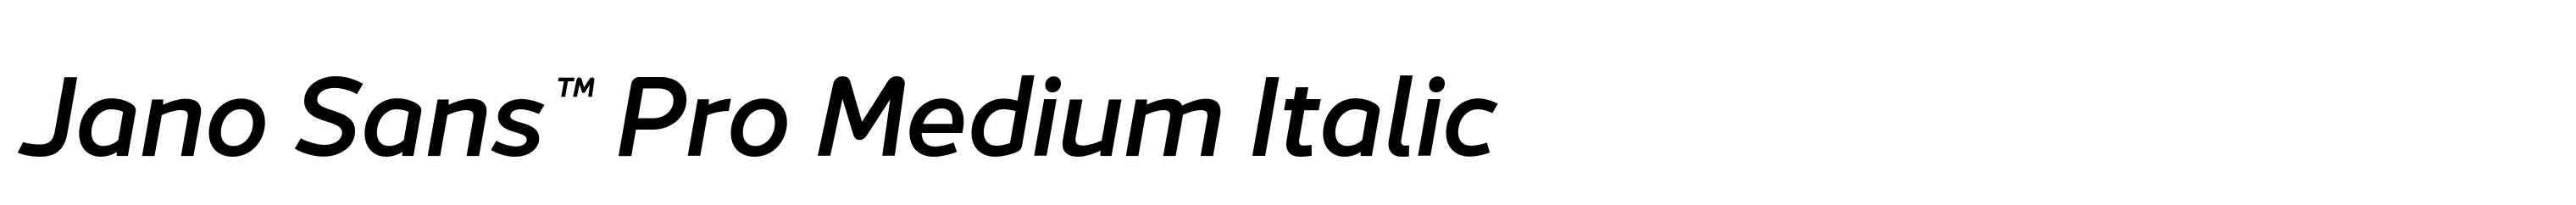 Jano Sans™ Pro Medium Italic